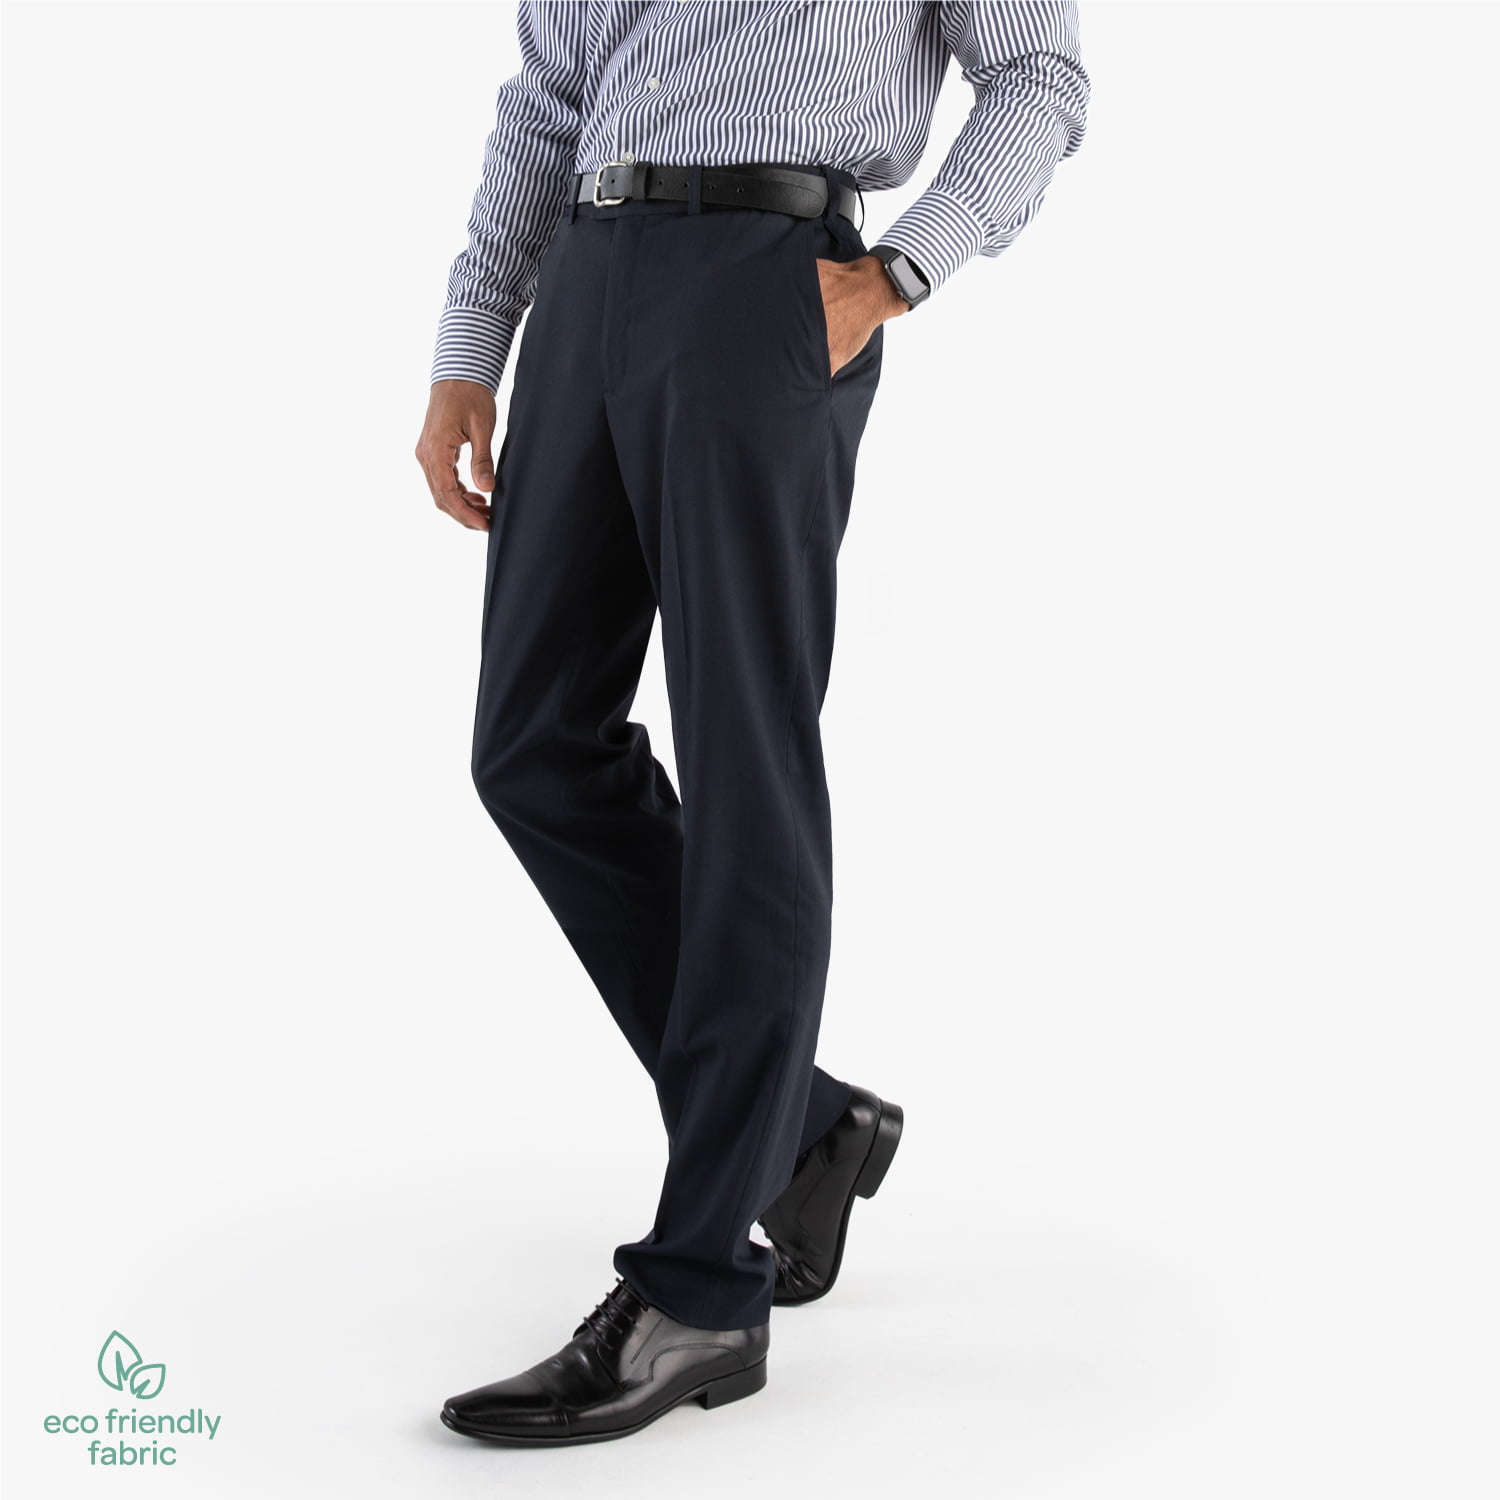 Xysaqa Men's Slim Fit Dress Pants Fashion Plaid Skinny Long Pants Casual  Checkered Business Pant for Men - Walmart.com